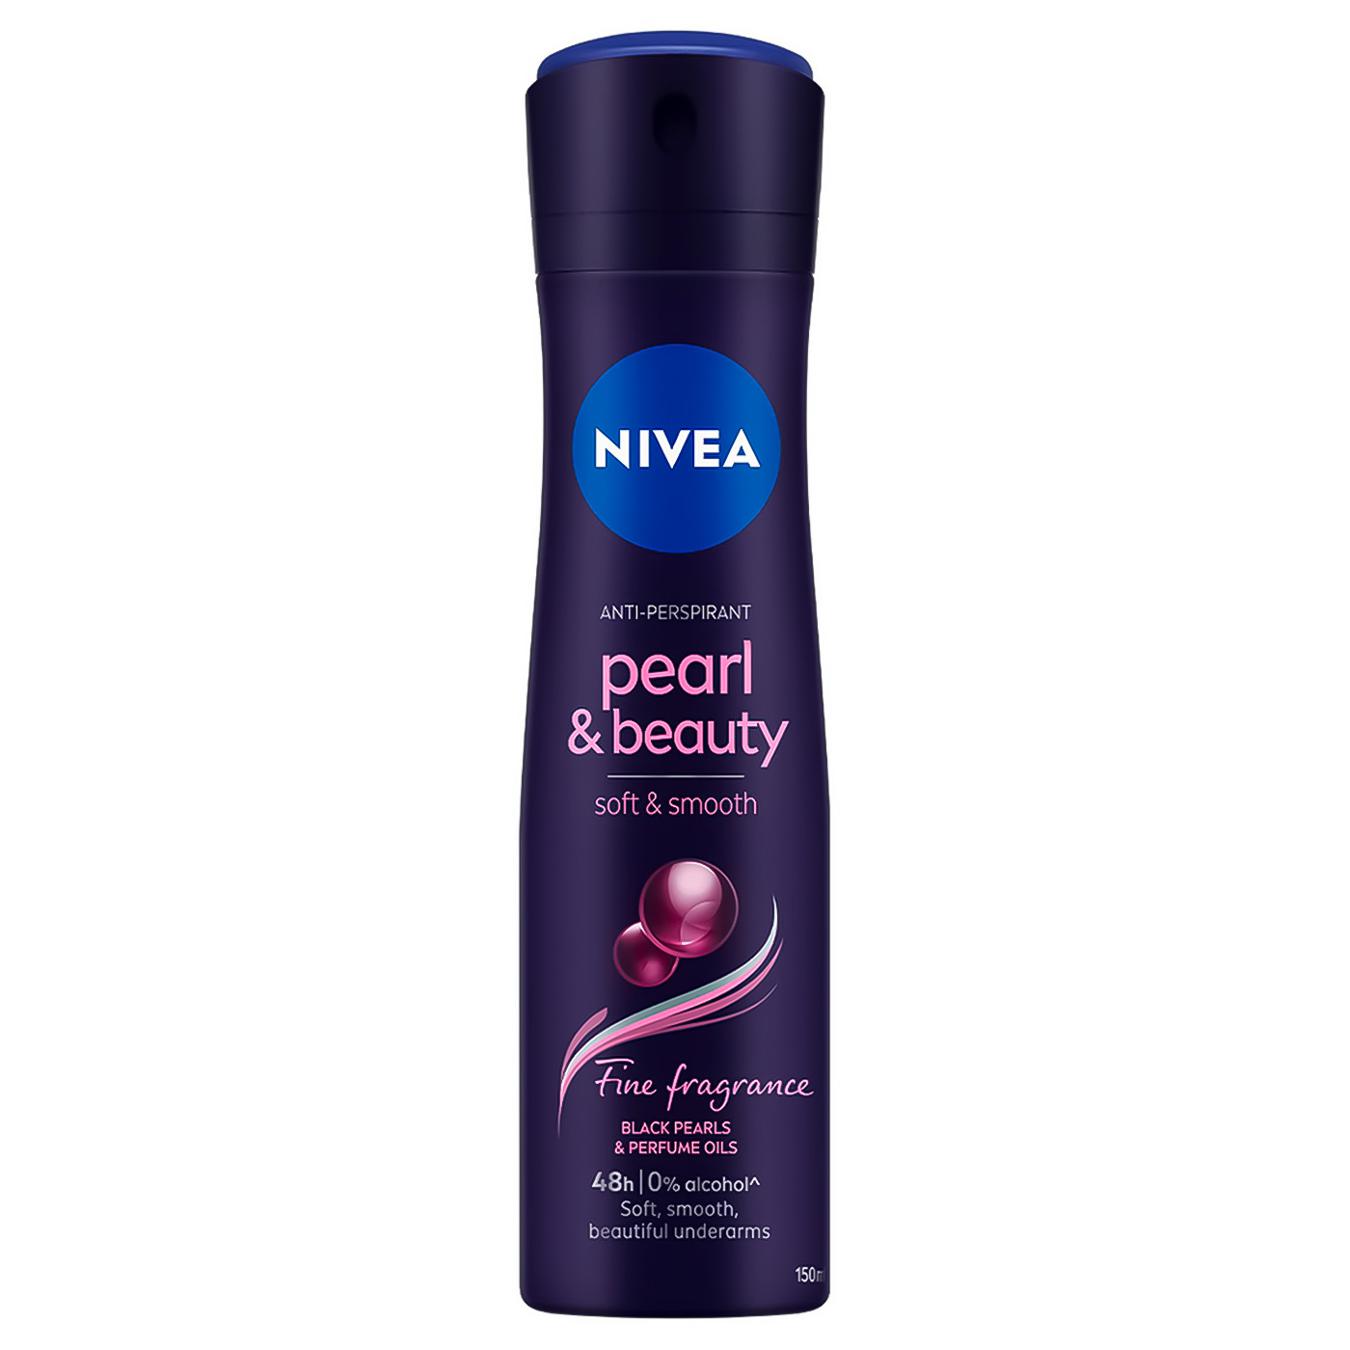 Antiperspirant Nivea pearl beauty premium perfume 150ml